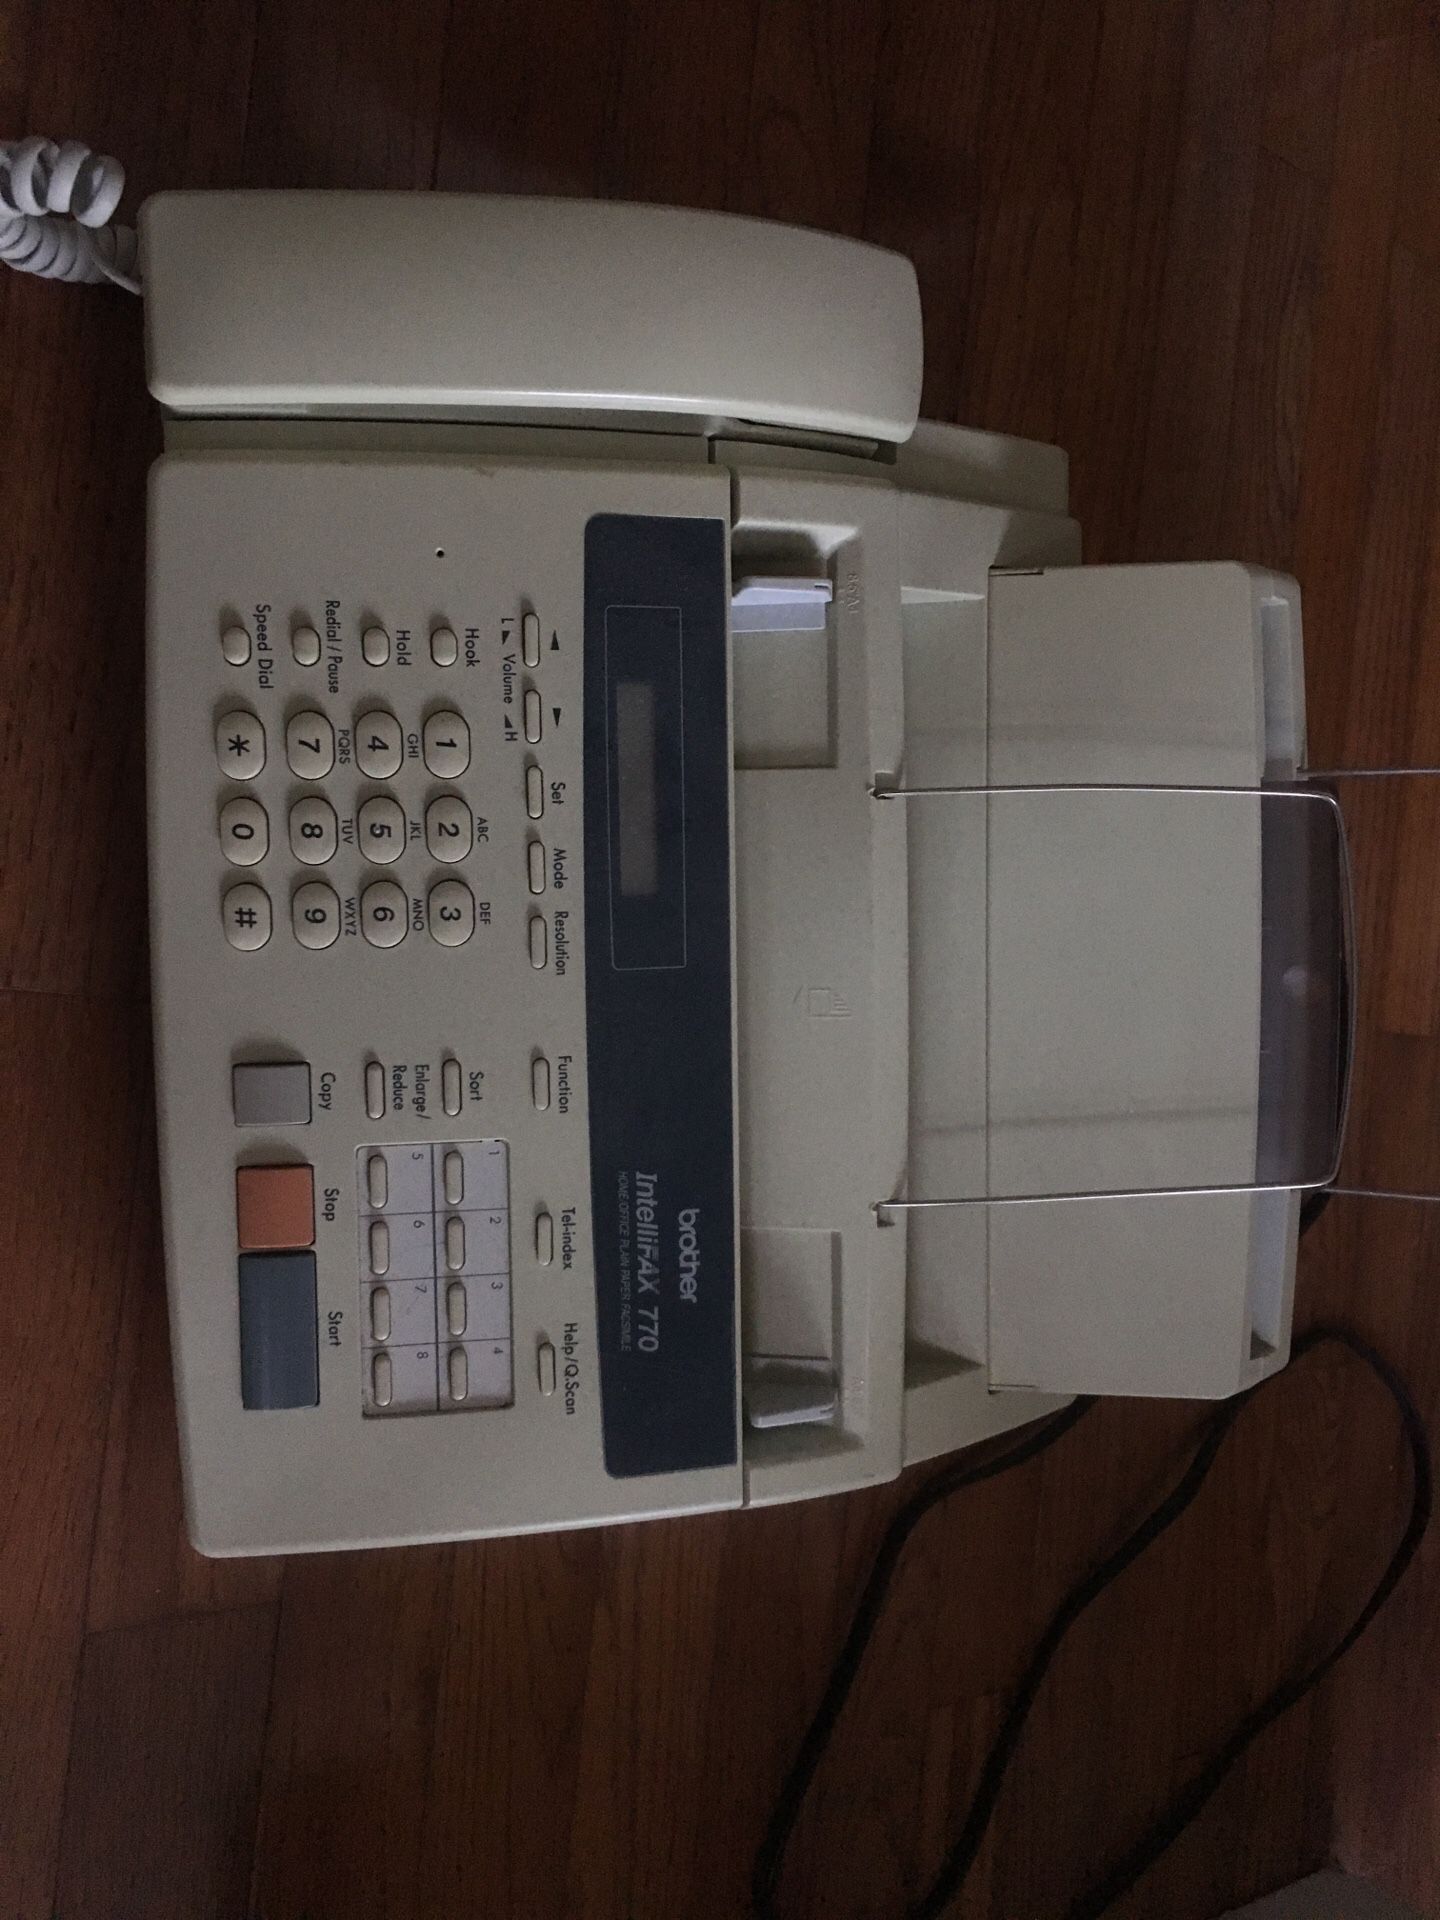 Brother Intellifax 770 Fax Machine